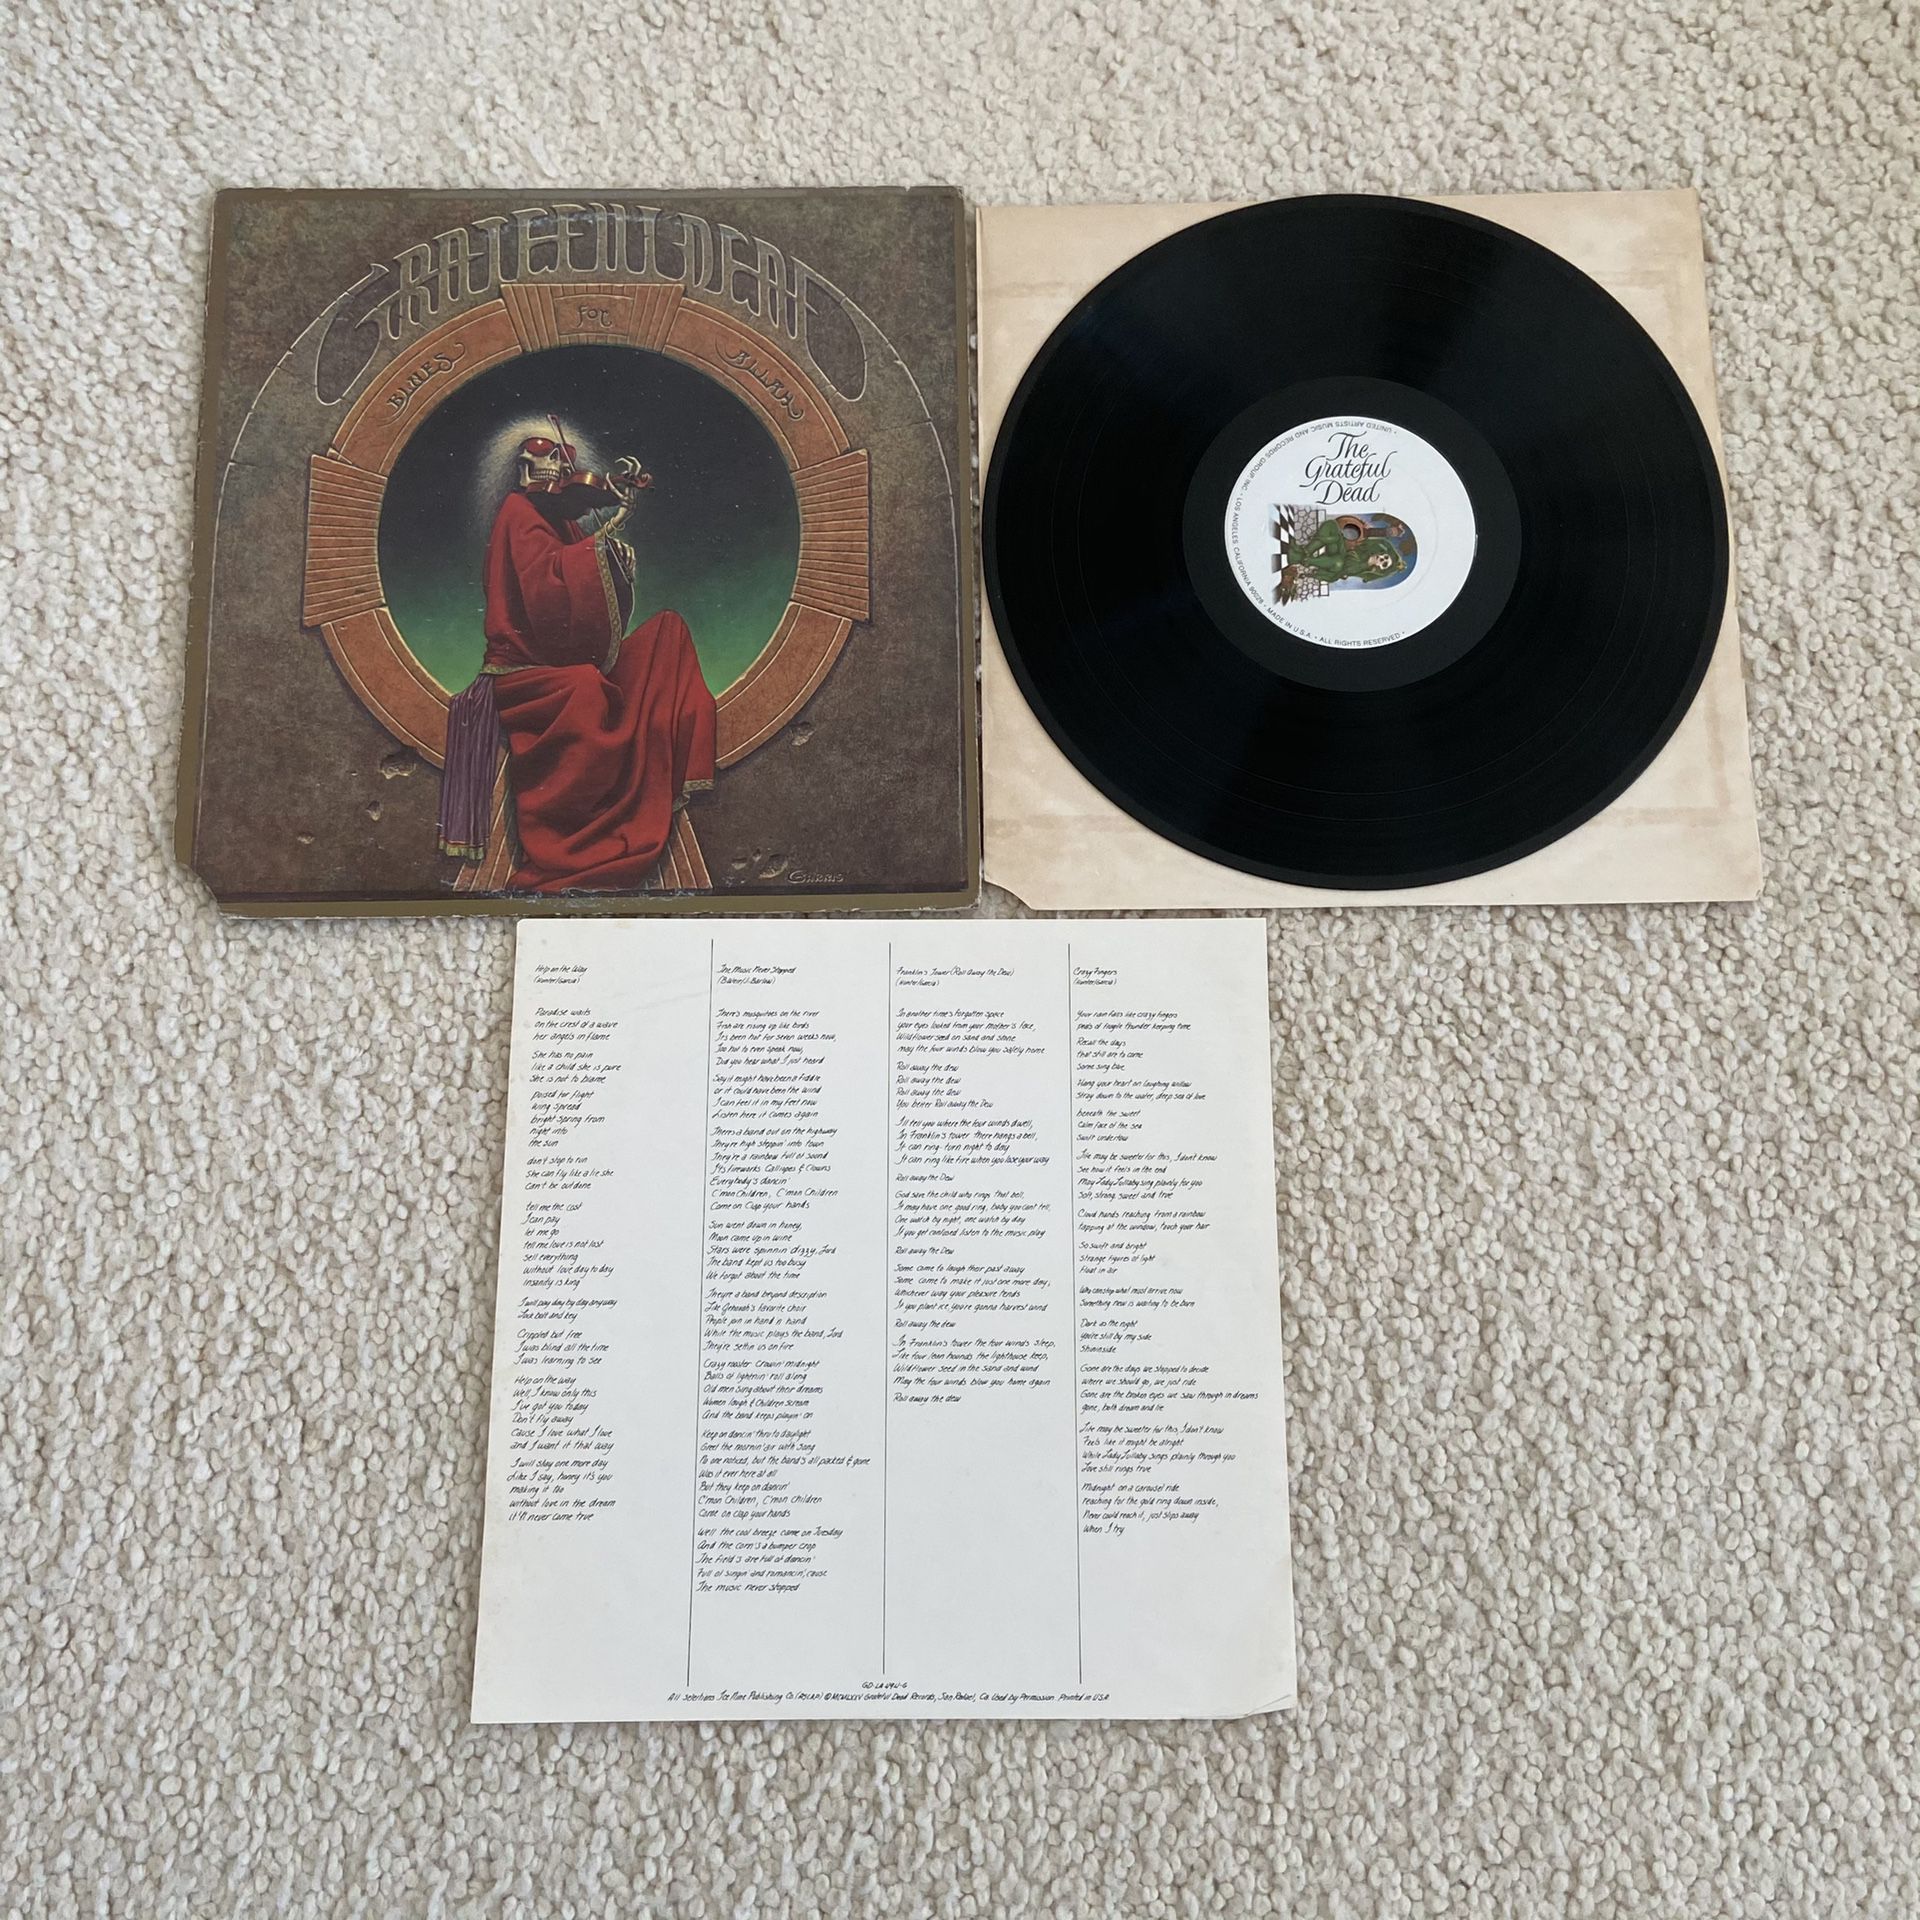 Grateful Dead “Blues For Allah” vinyl lp 1975 Grateful Dead Records Original Terre Haute Pressing beautiful glossy like new vinyl Rock